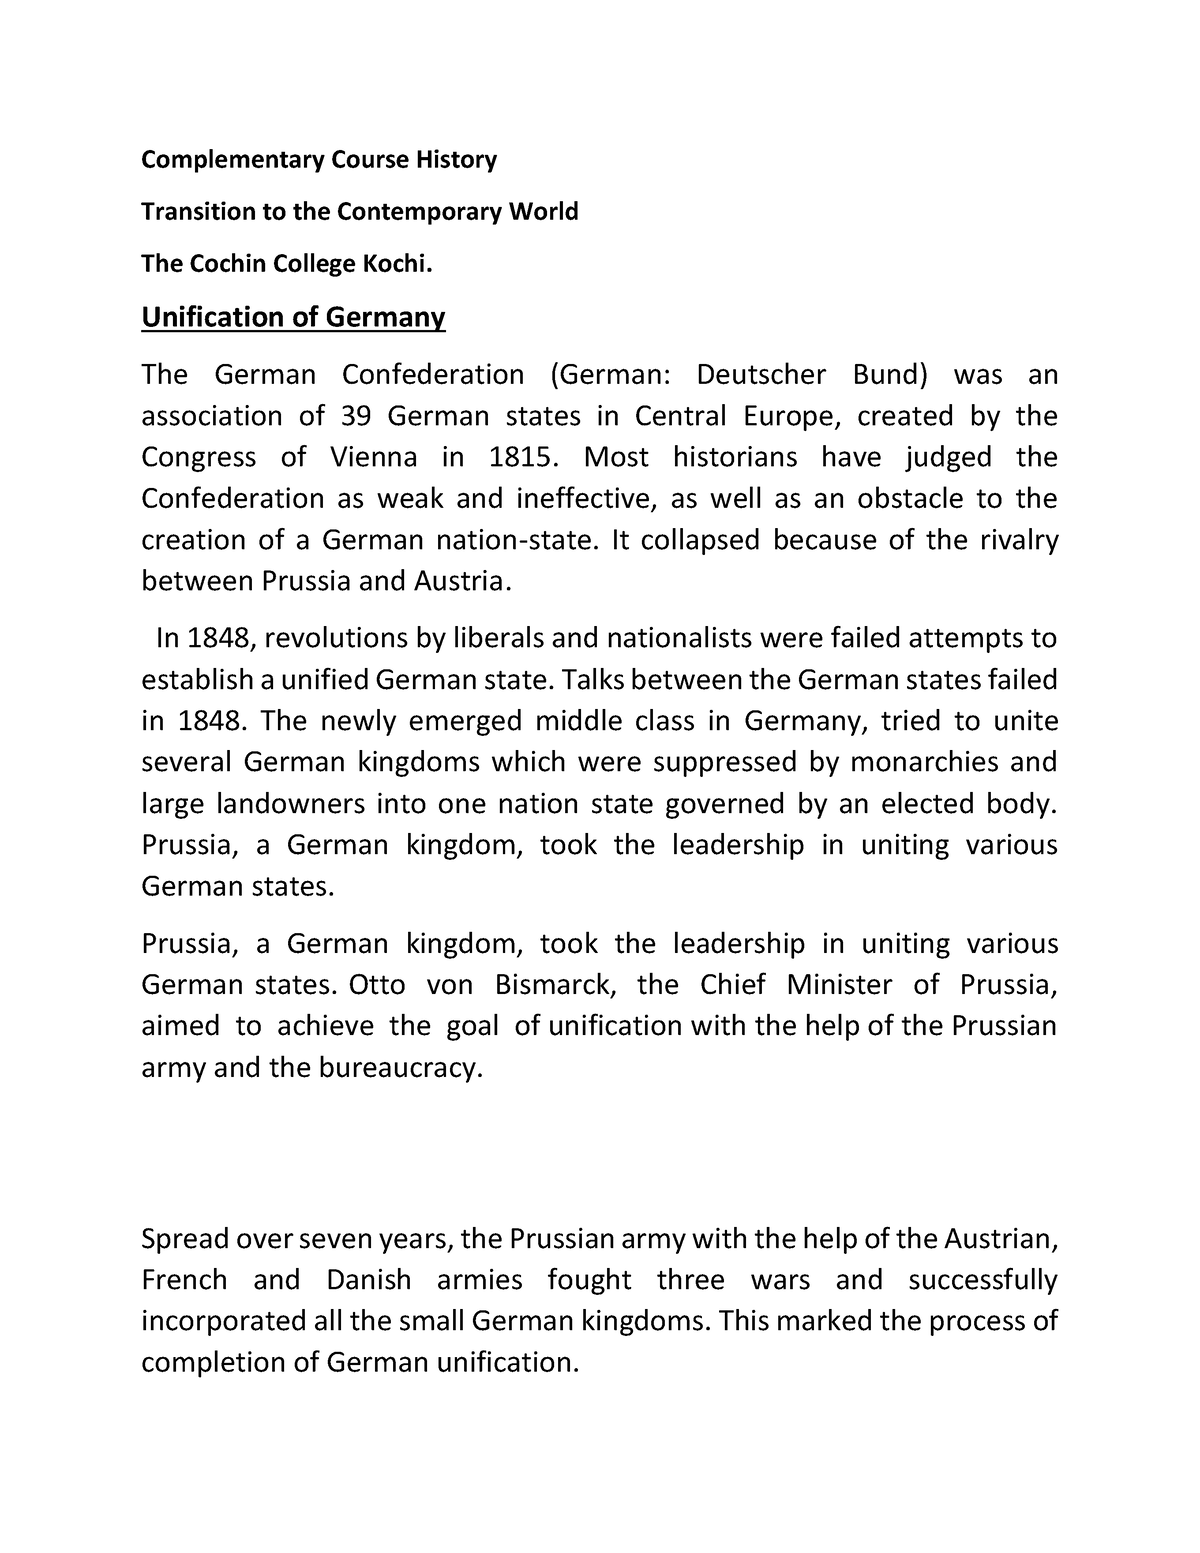 german unification essay